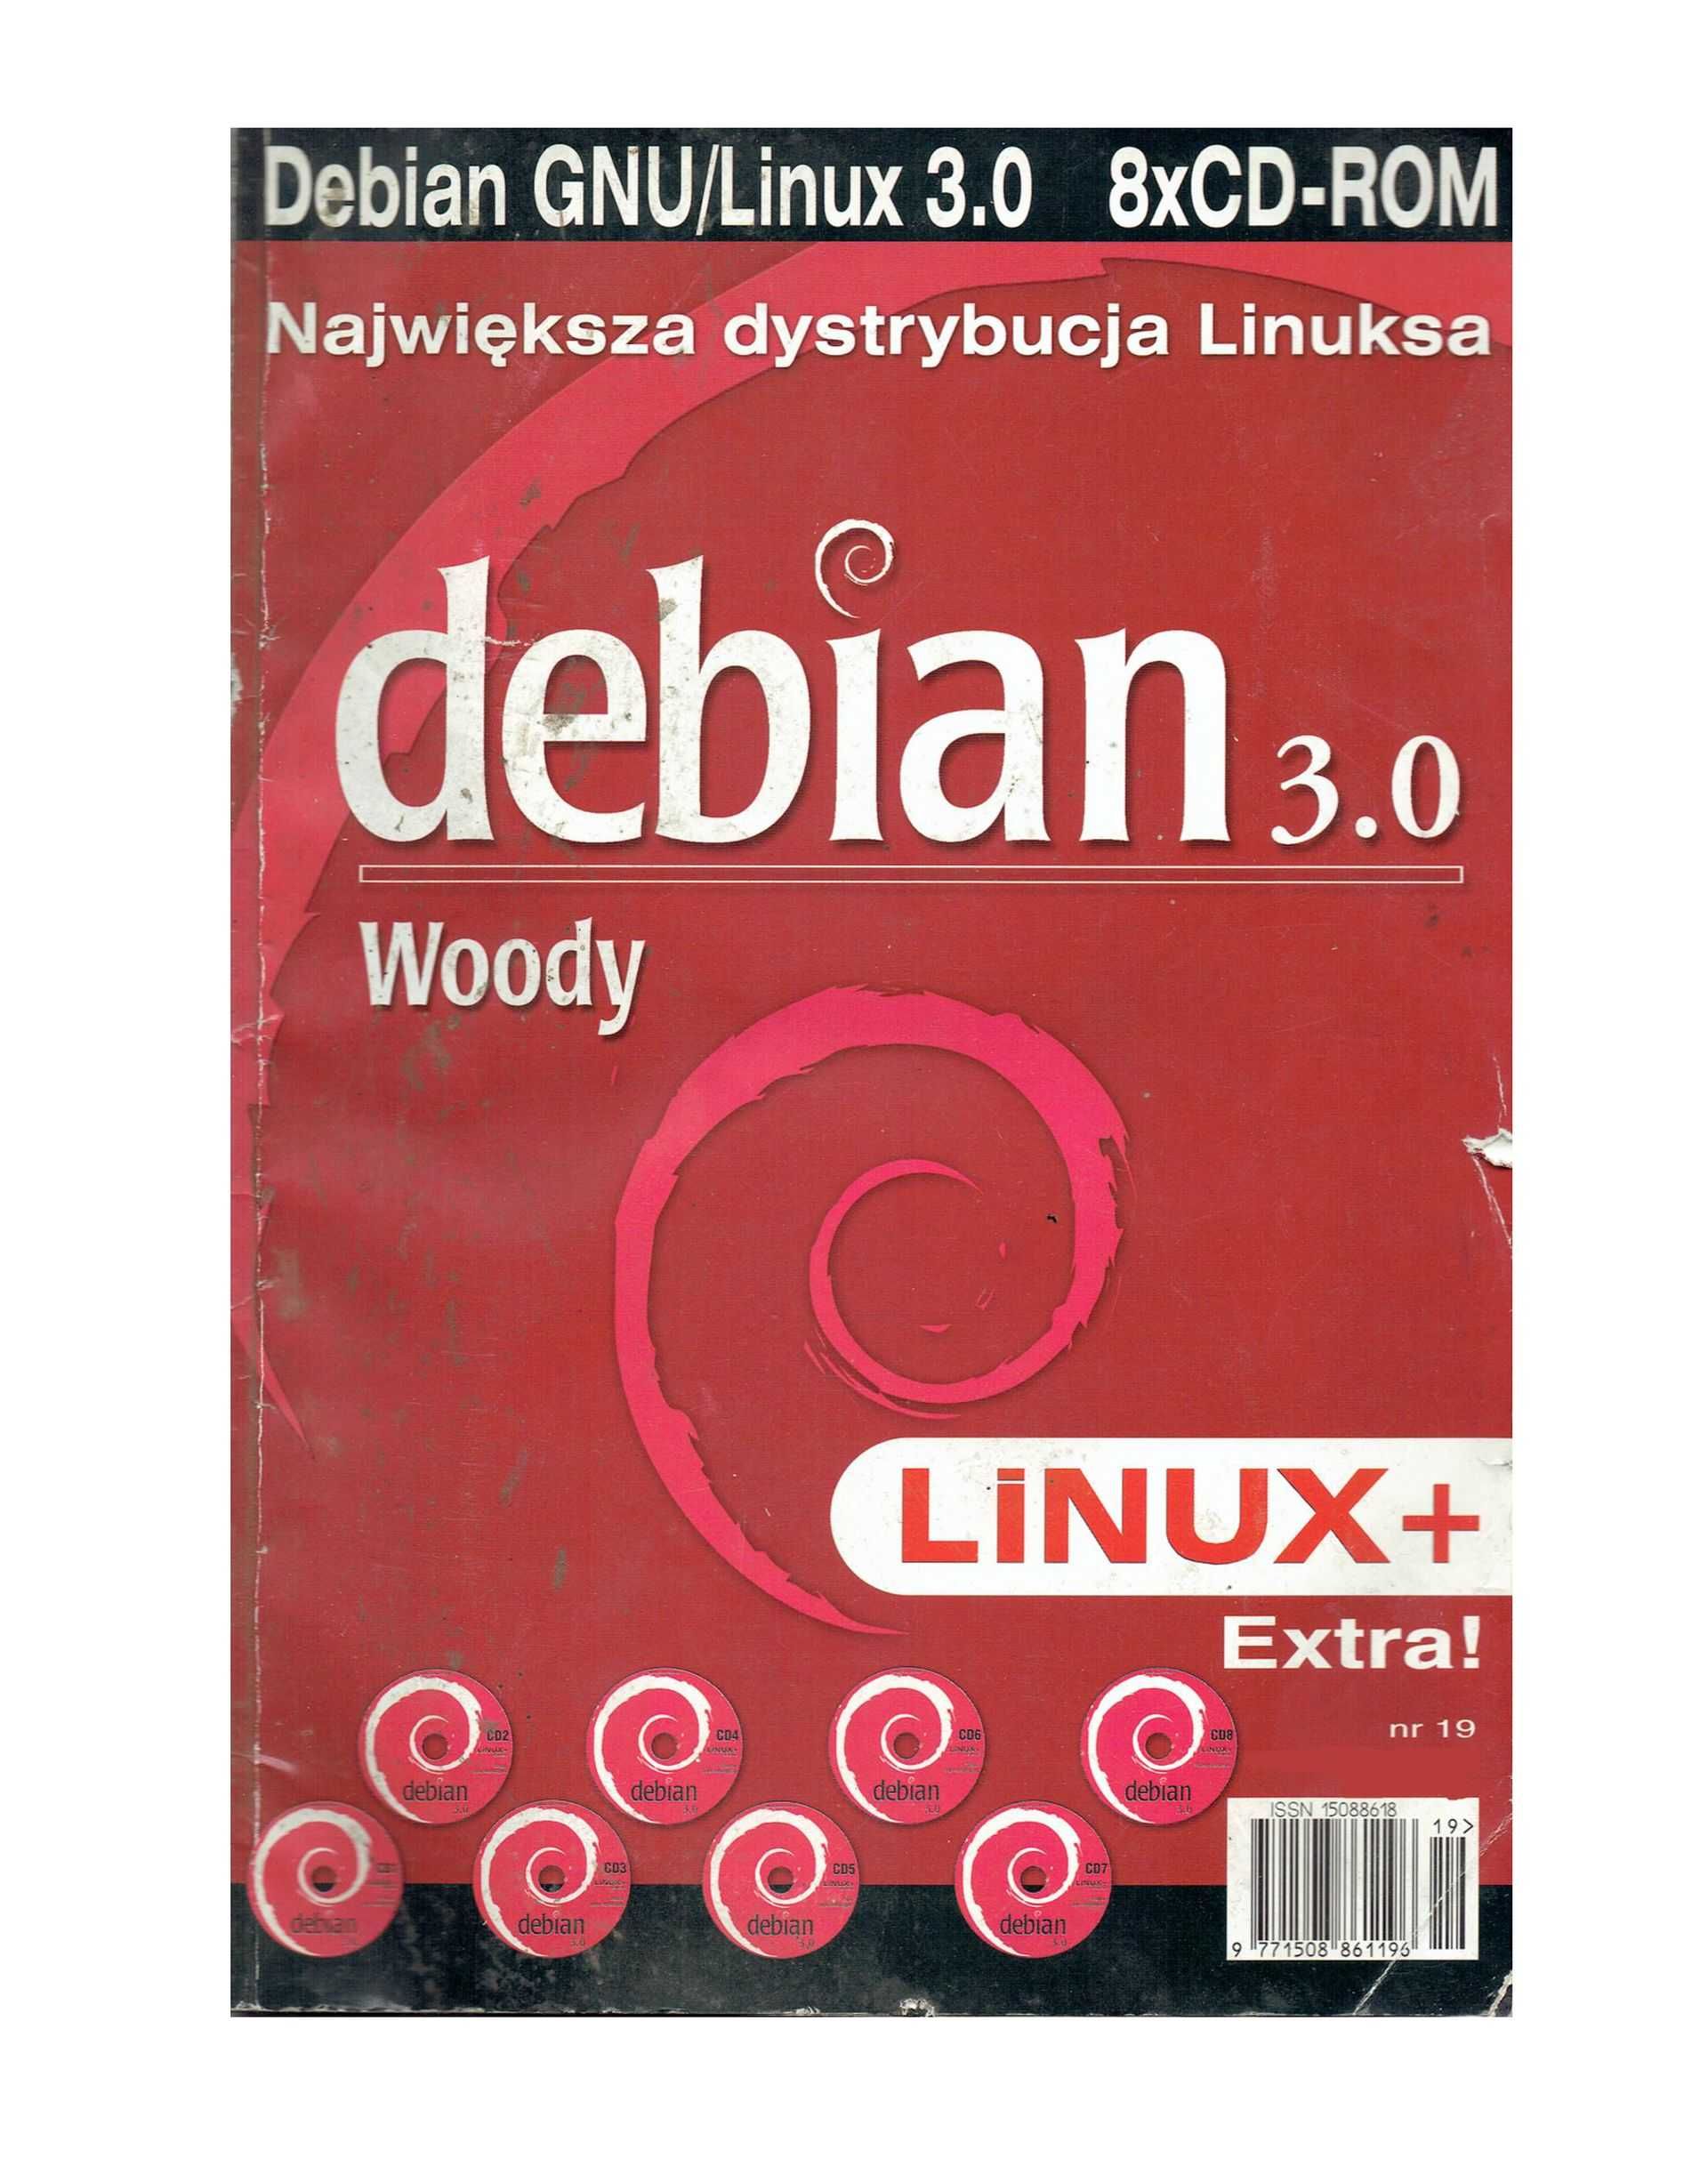 Debian GNU Linux 3.0 Woody 8 płyt CD największa dystrybucja linuksa